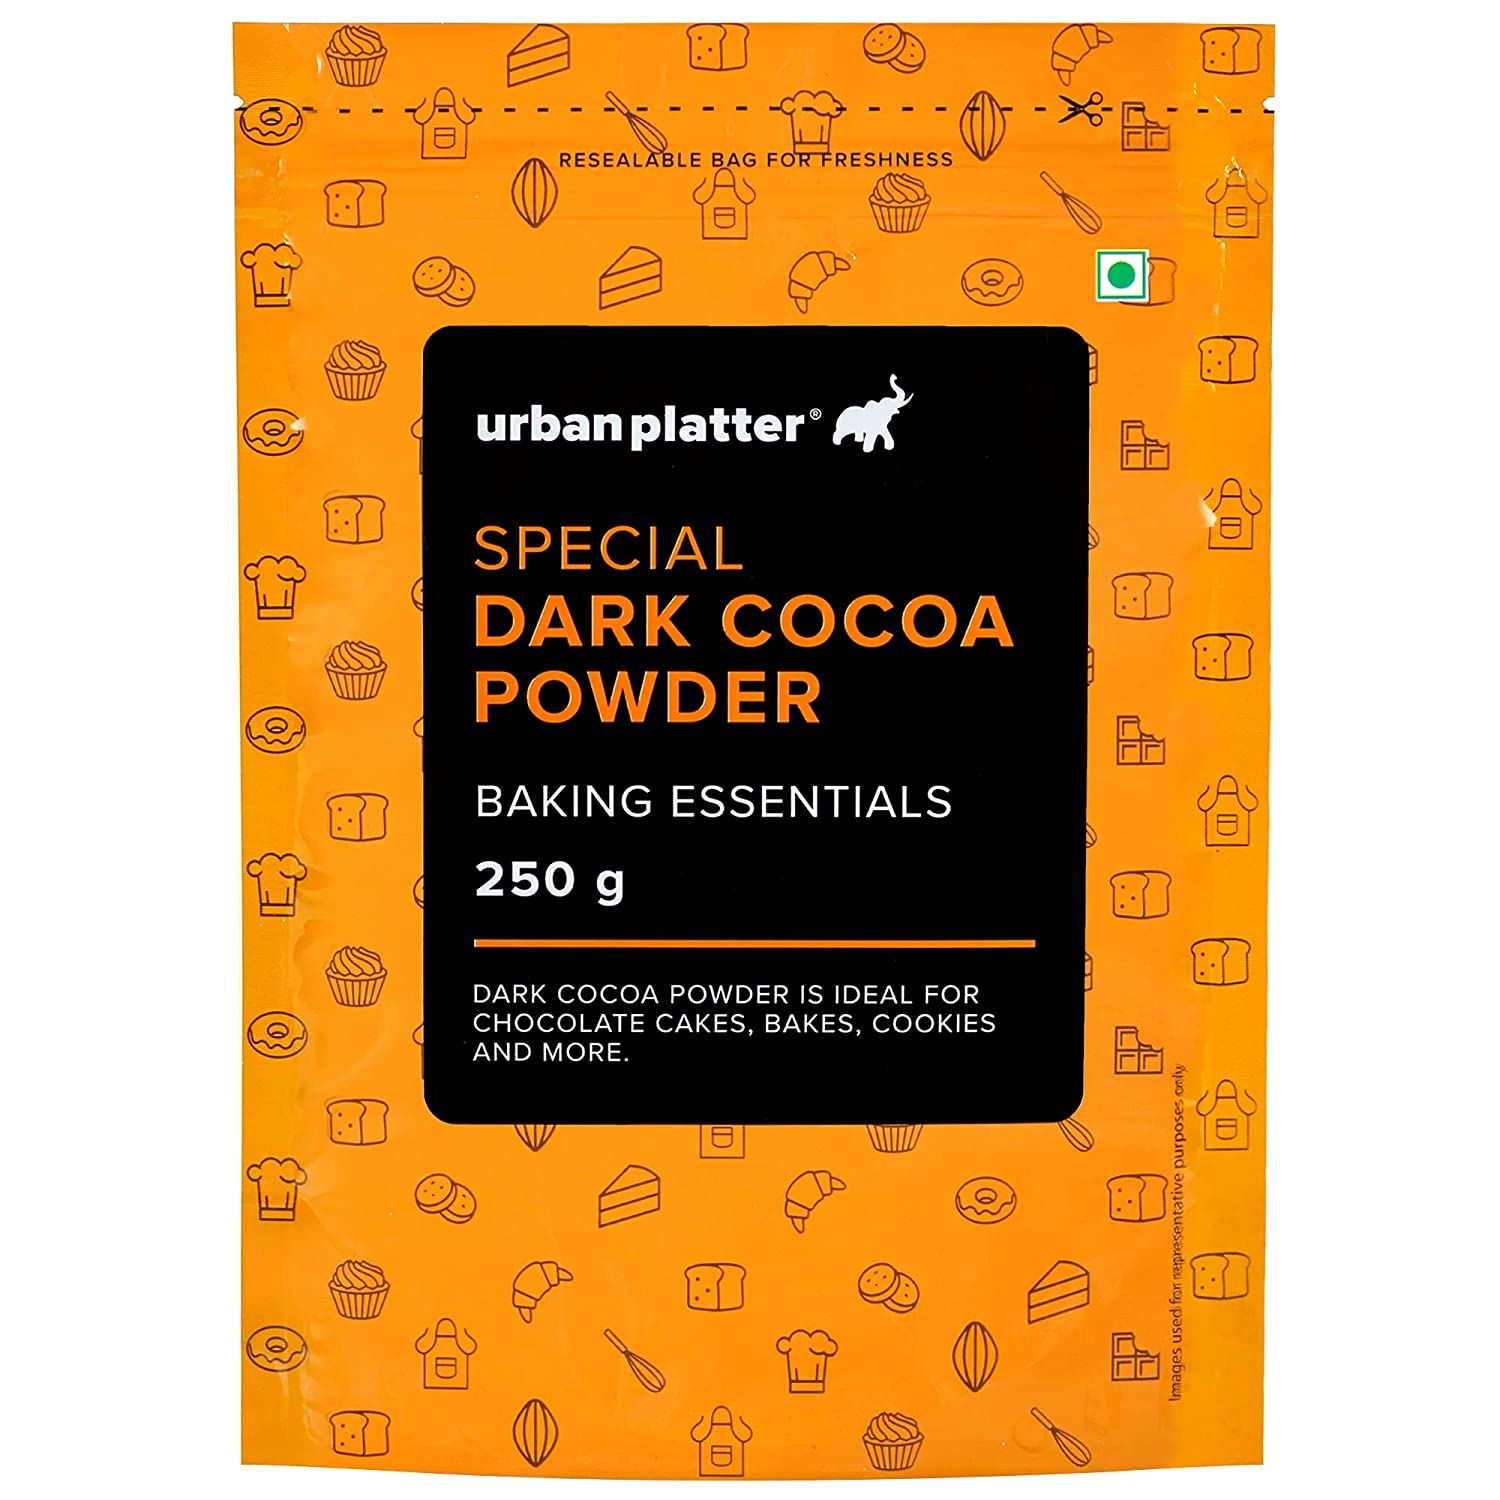 Urban Platter Special Dark Cocoa Powder Image